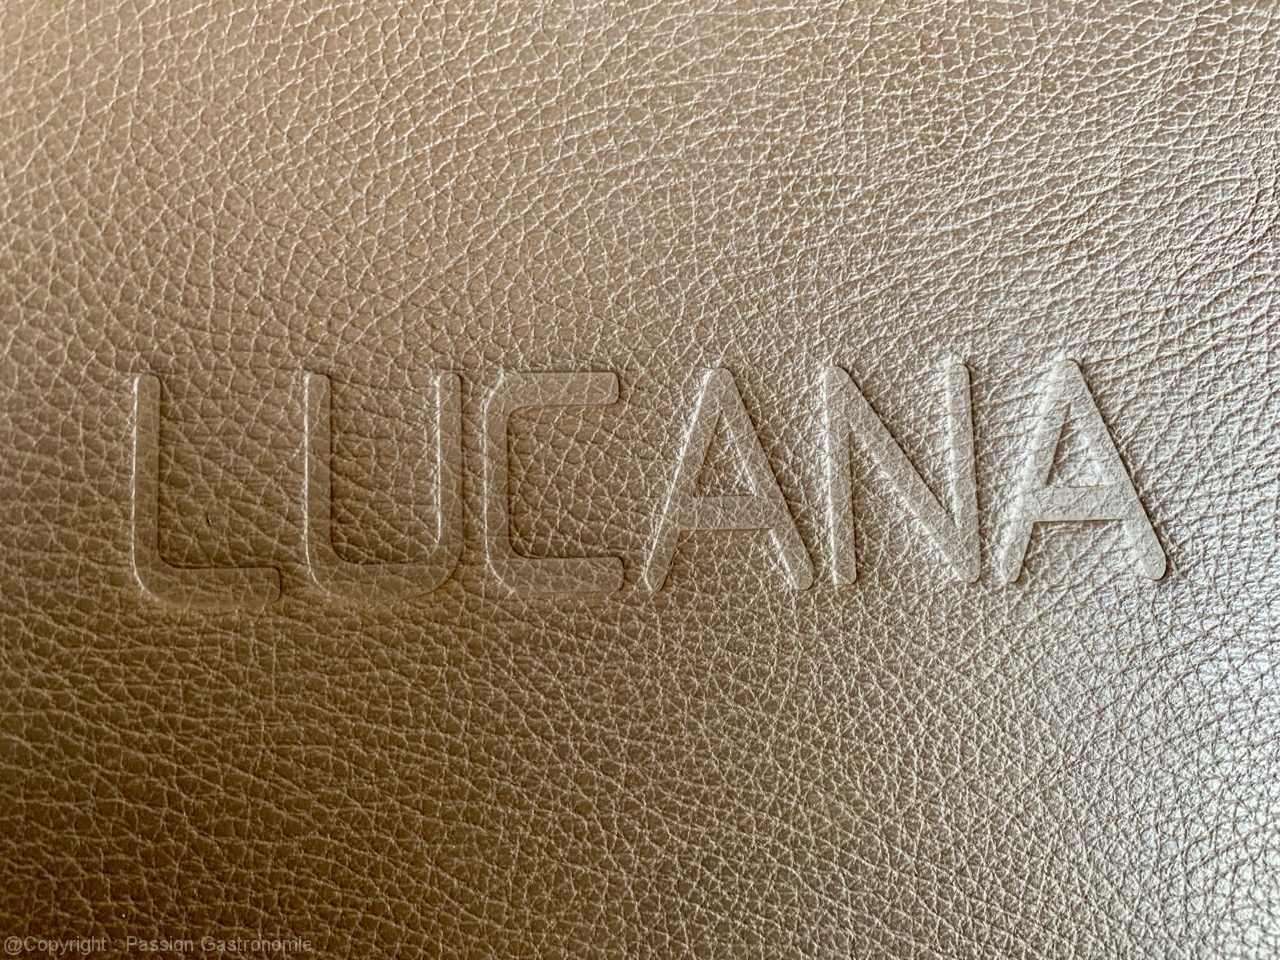 Restaurant Lucana - Le logo